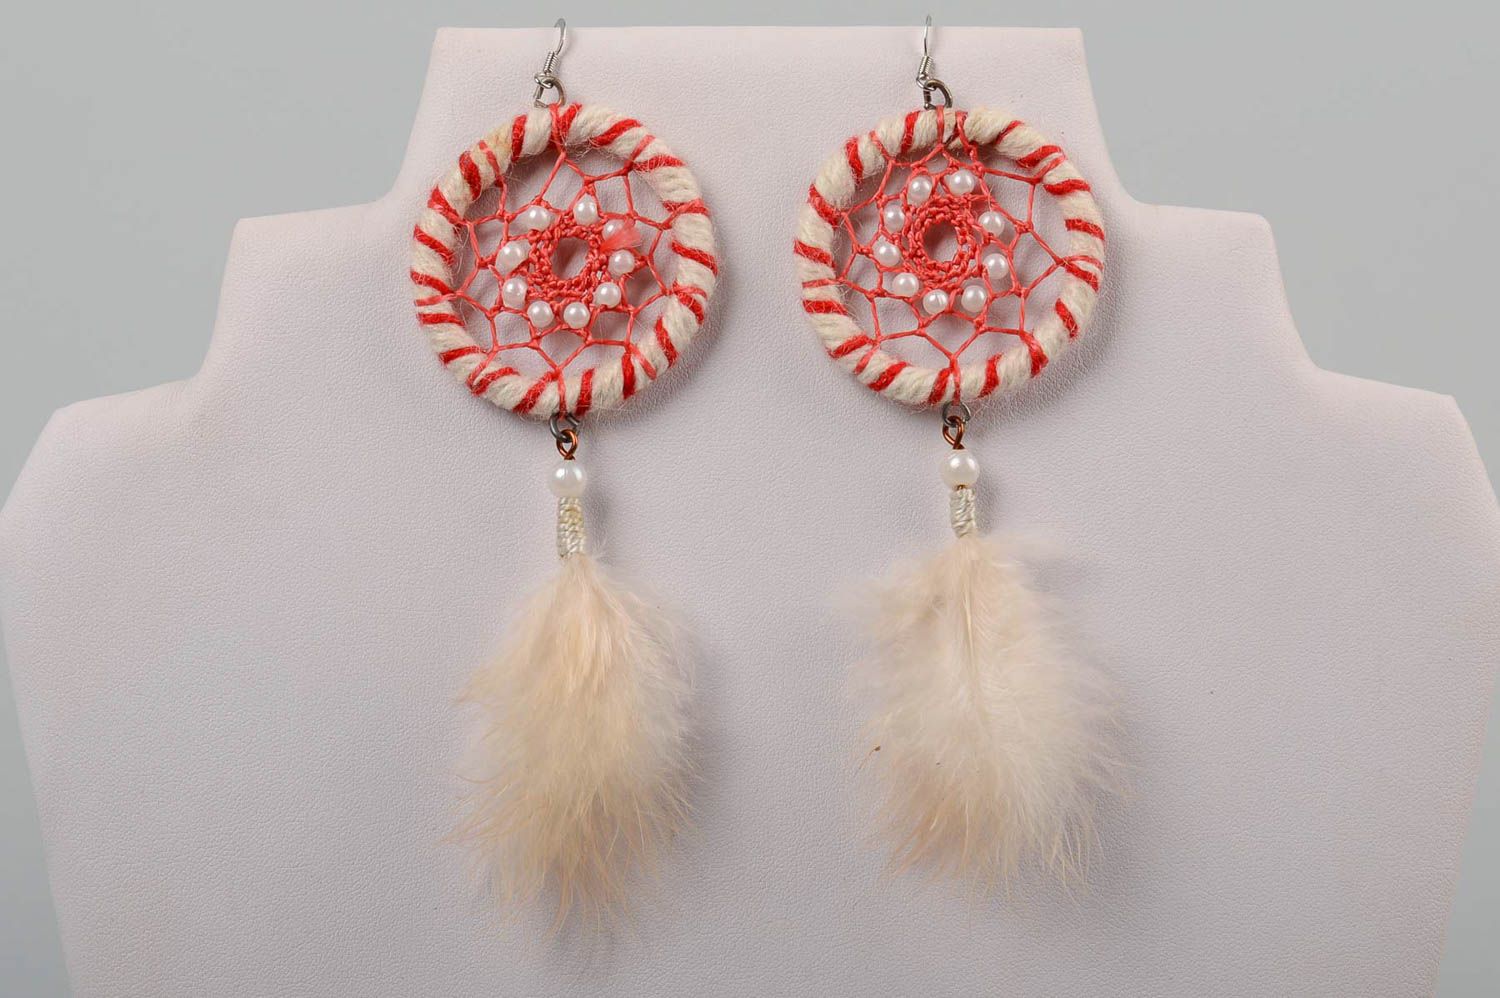 Homemade earrings large dreamcatcher earrings designer jewelry gifts for women photo 4